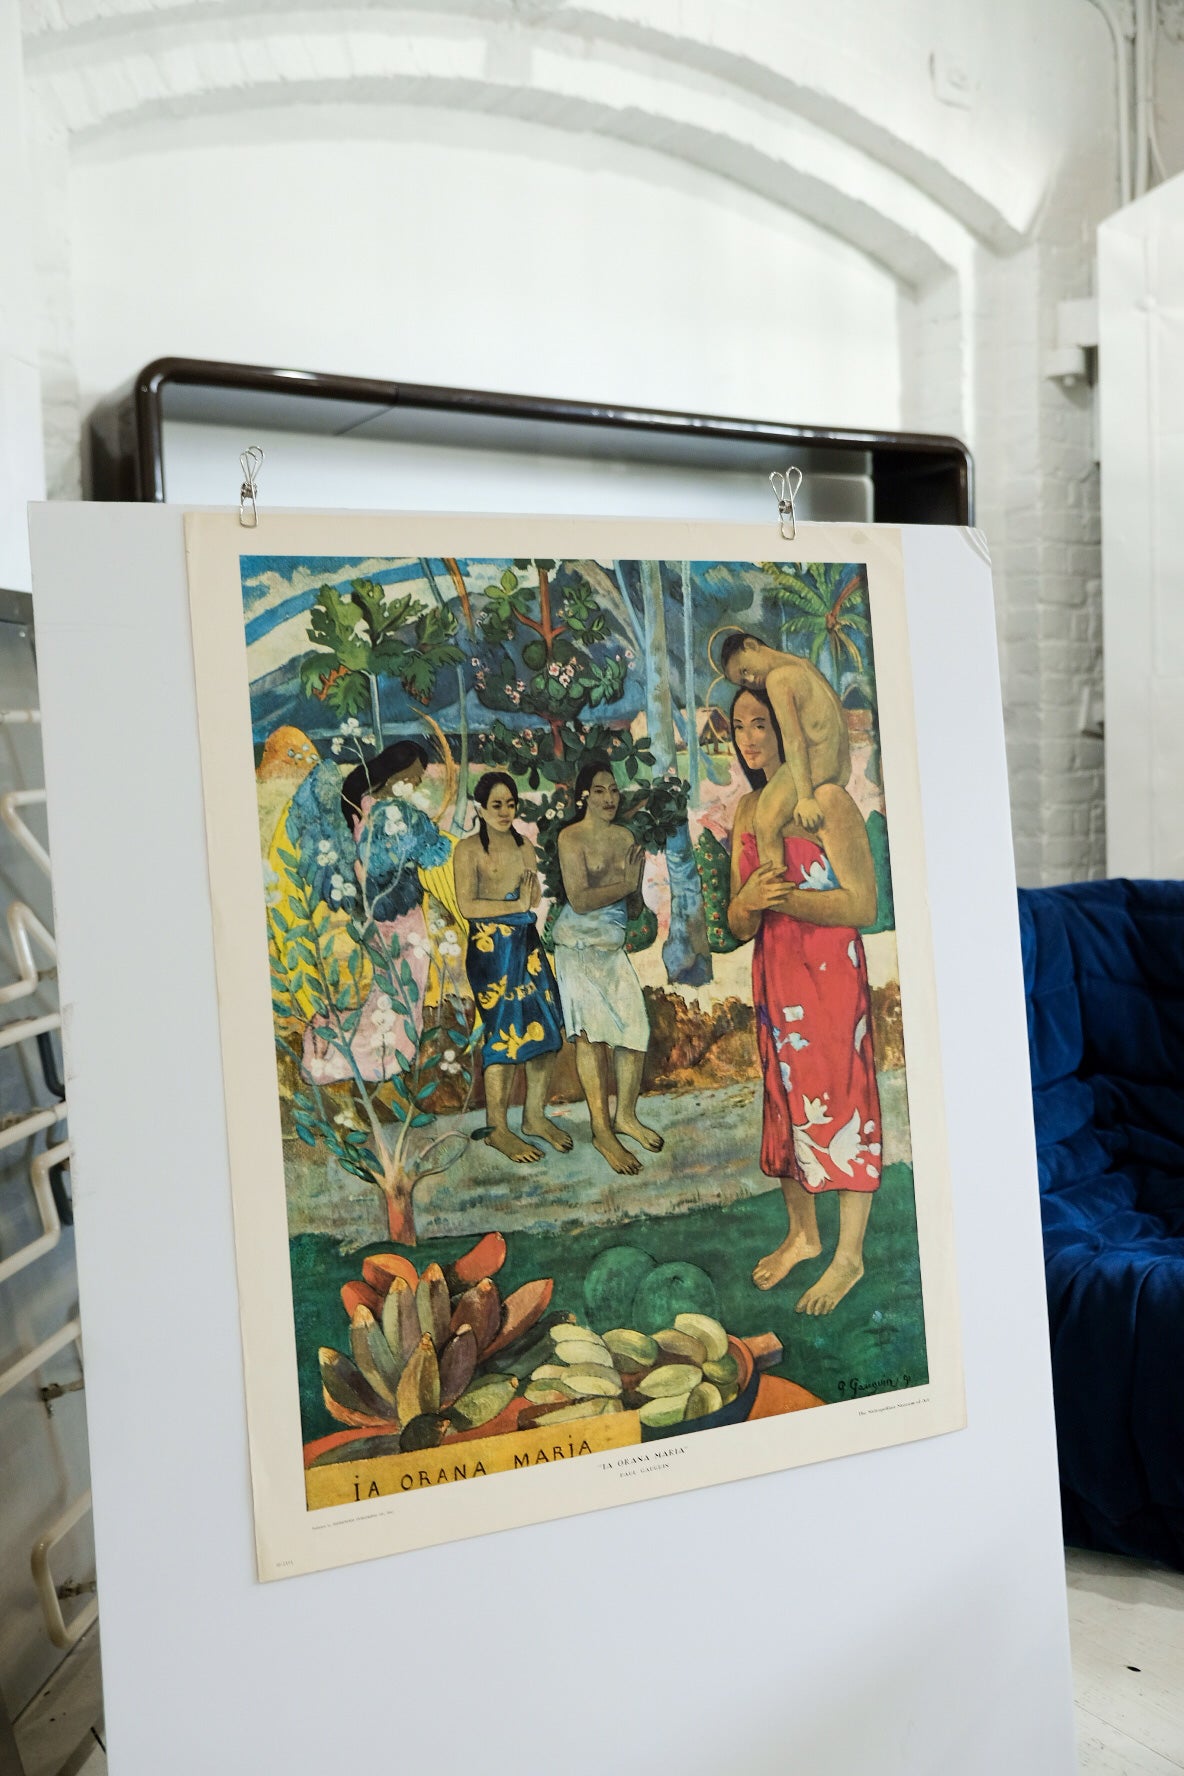 Paul Gauguin "Ia Orana Maria" (Hail Mary)